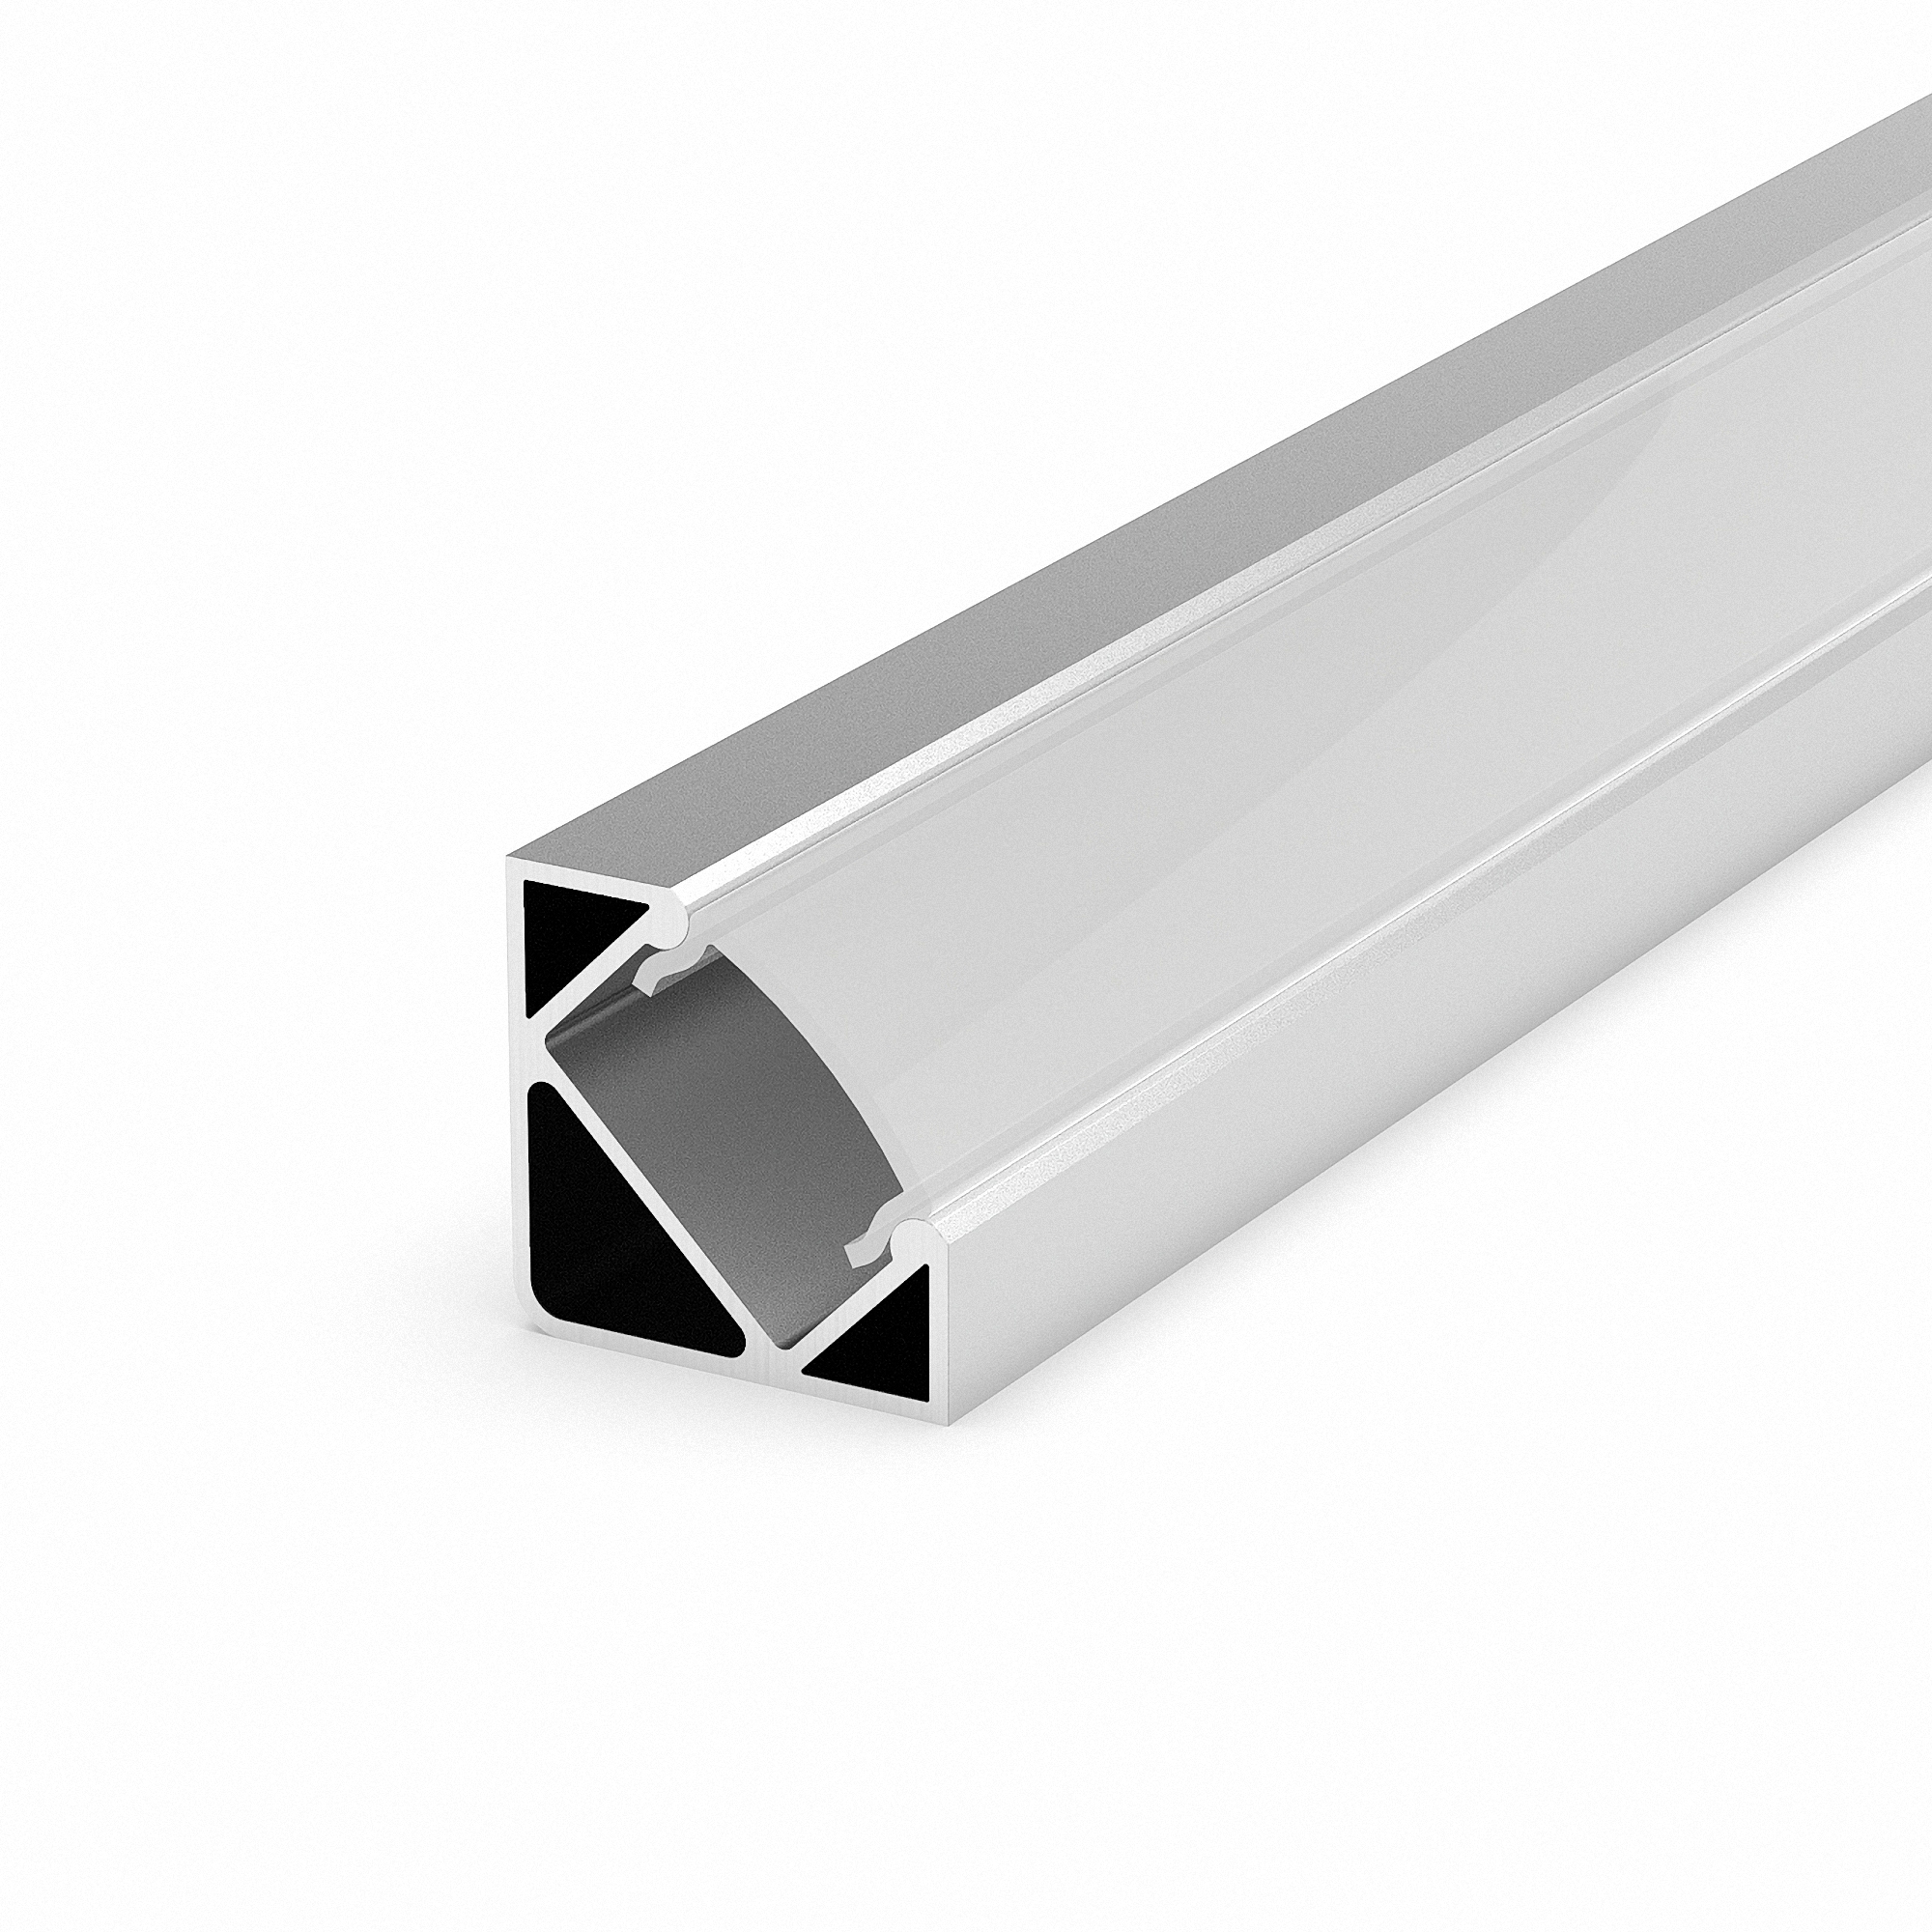 Paket] LED Profile in silber P3-1 100CM opal Abdeckung für LED